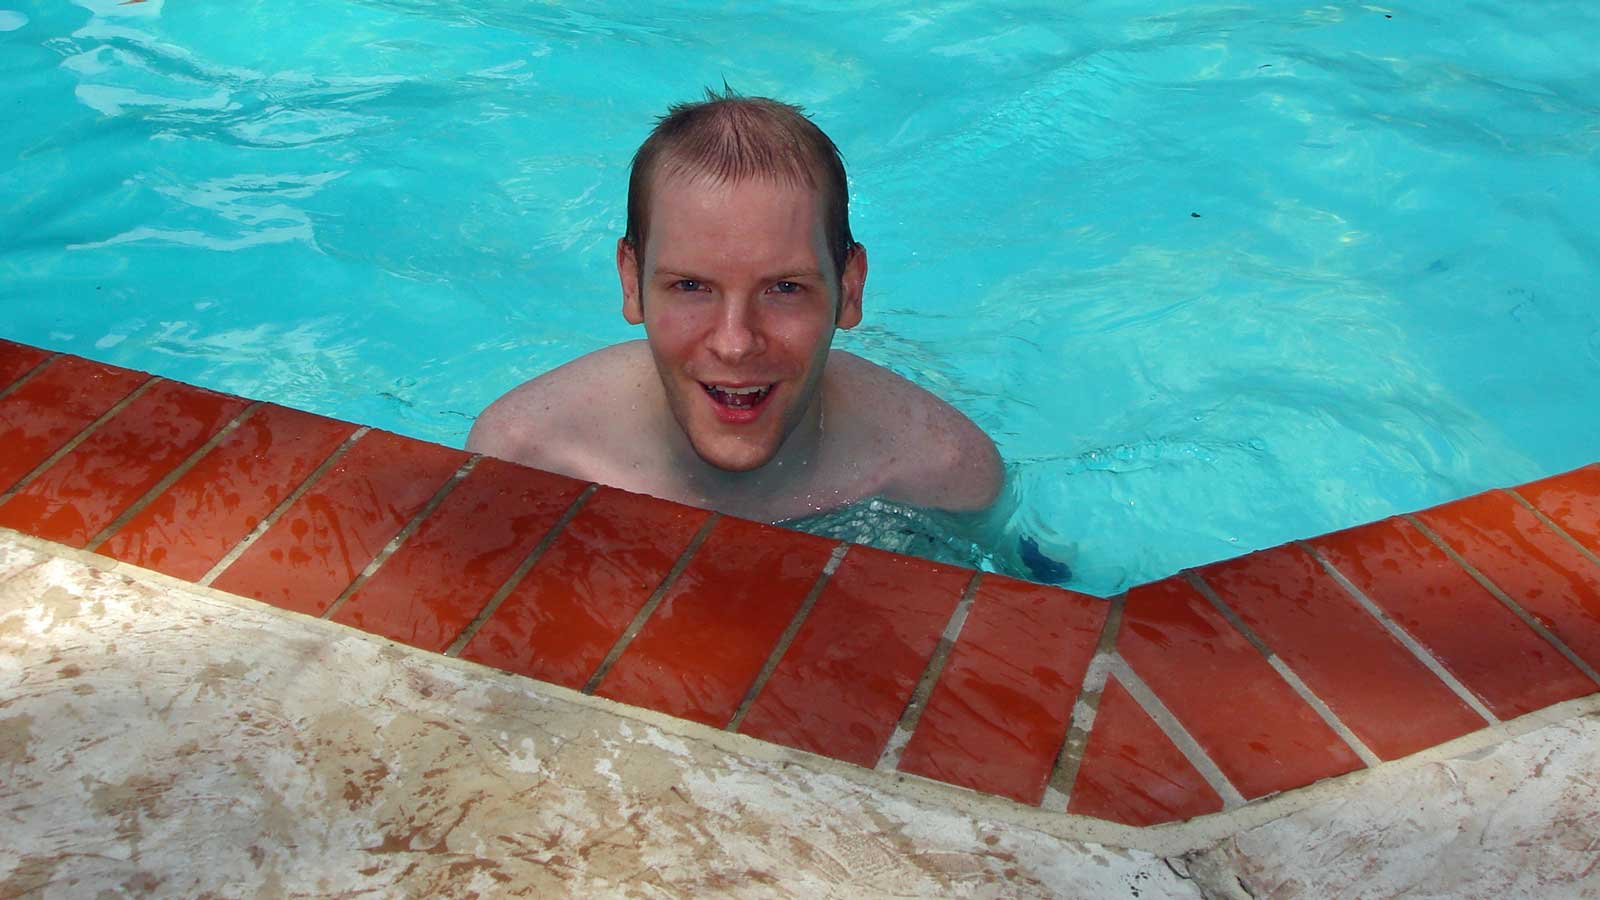 William in the pool